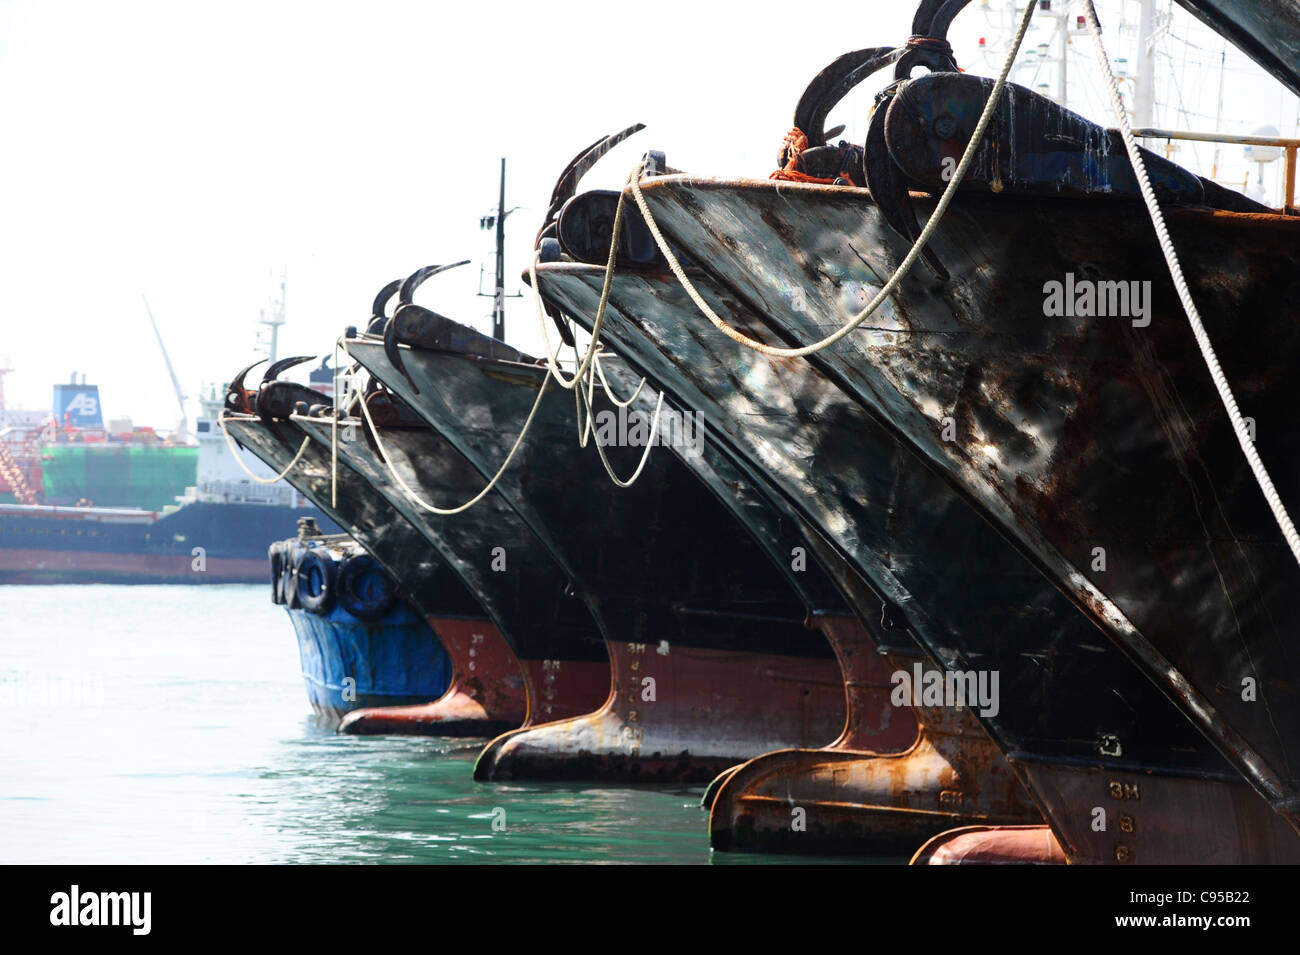 A row of fishing boat in Busan, South Korea. Stock Photo